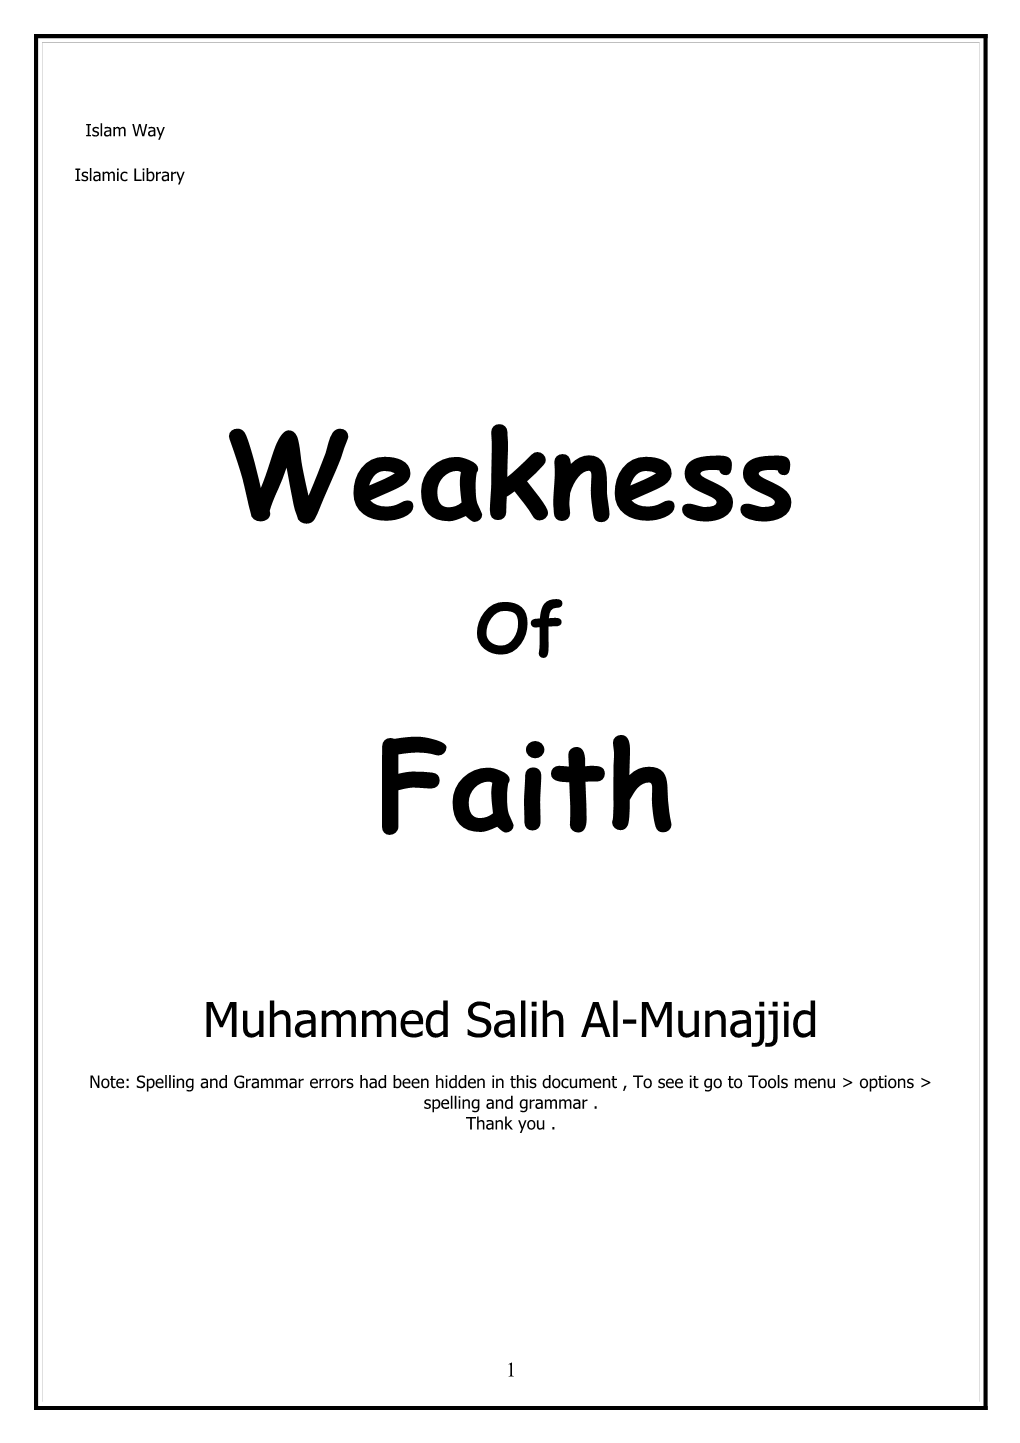 Weakness of Faith